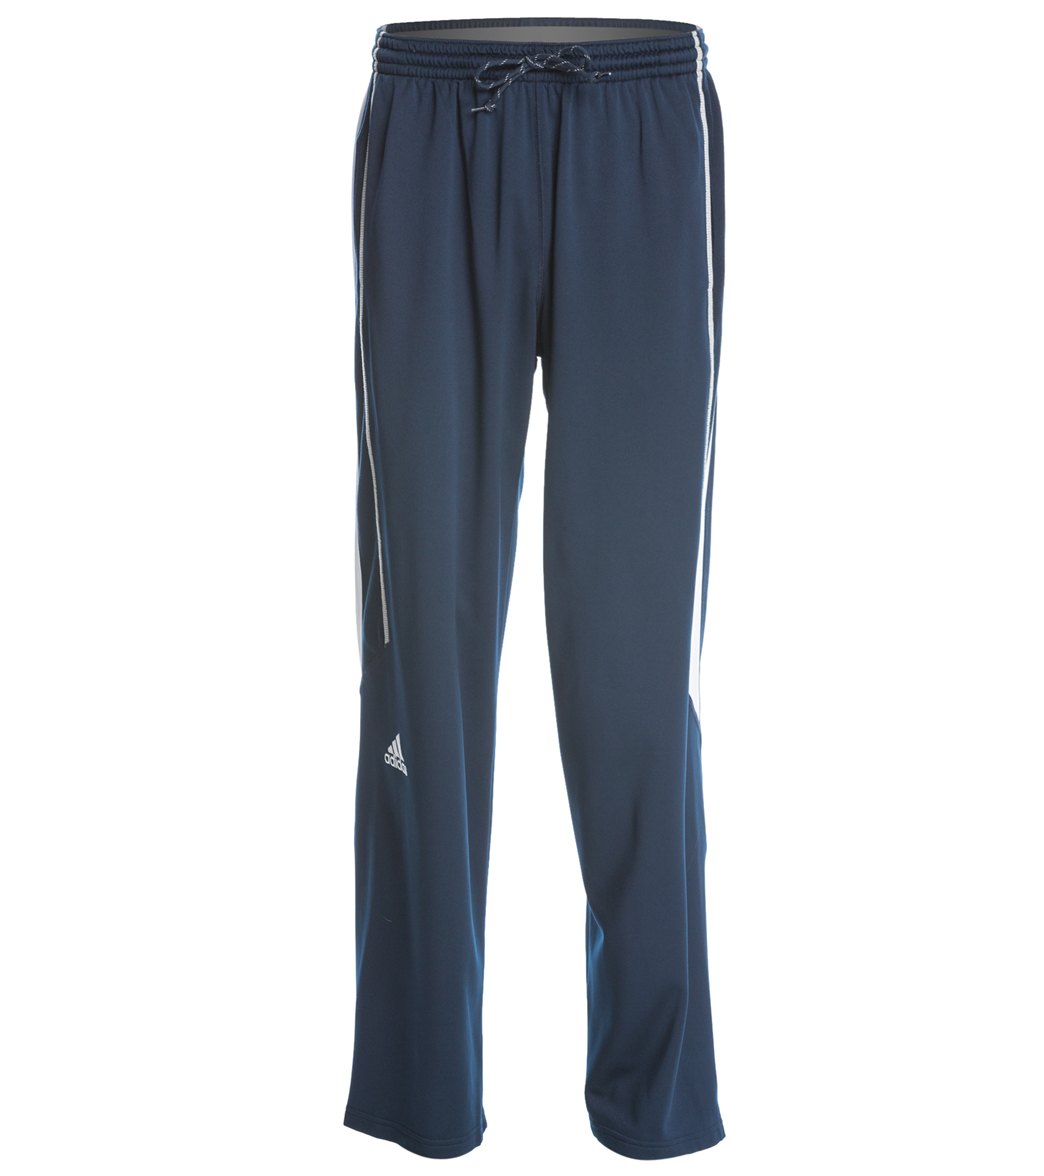 Adidas Men's Utility Warm Up Pants - Navy Xxl Polyester - Swimoutlet.com